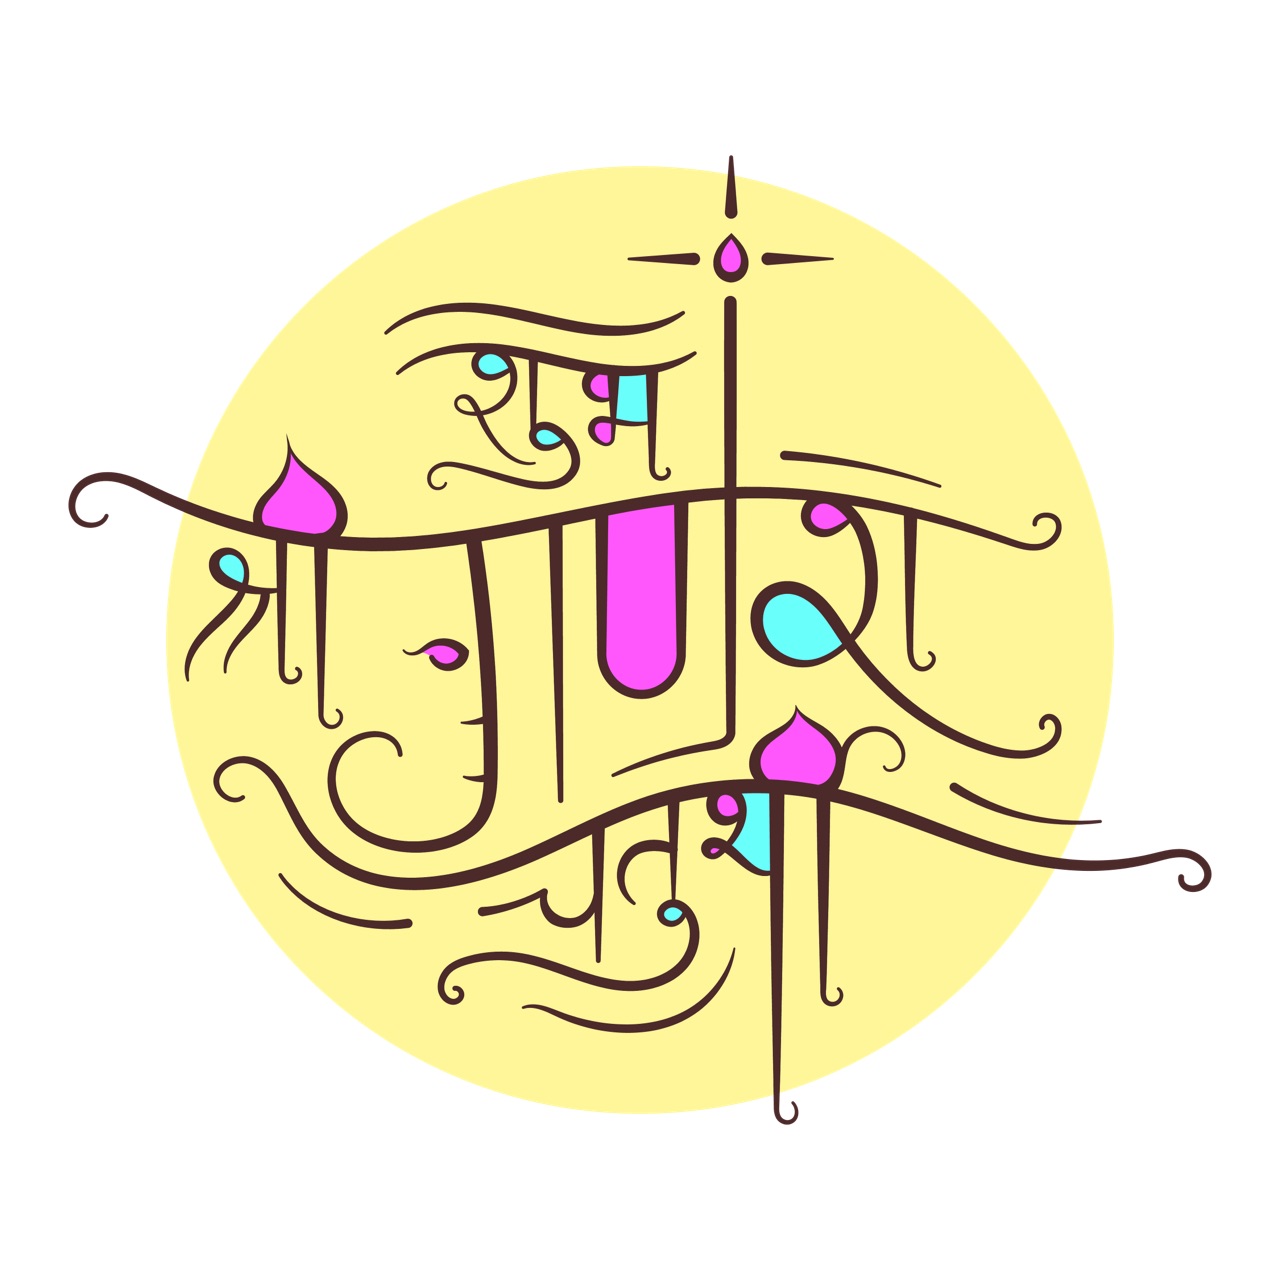 Shri Ganesh Chaturthi Wishing - Typography Vector Art cover image.